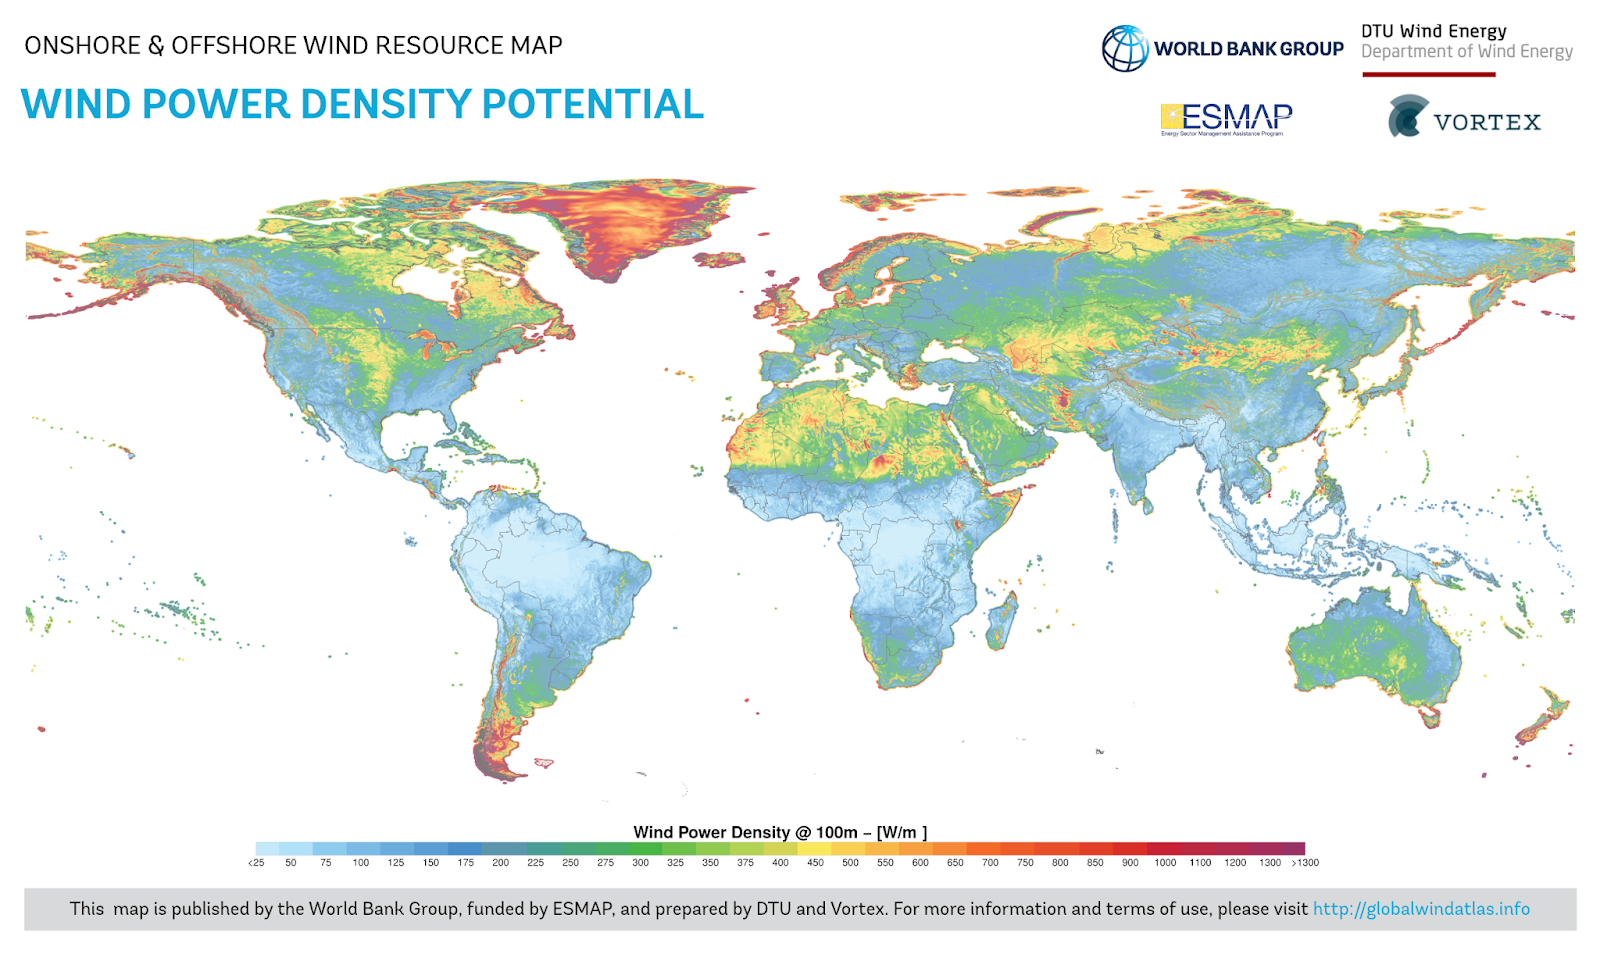 Wind power density potential